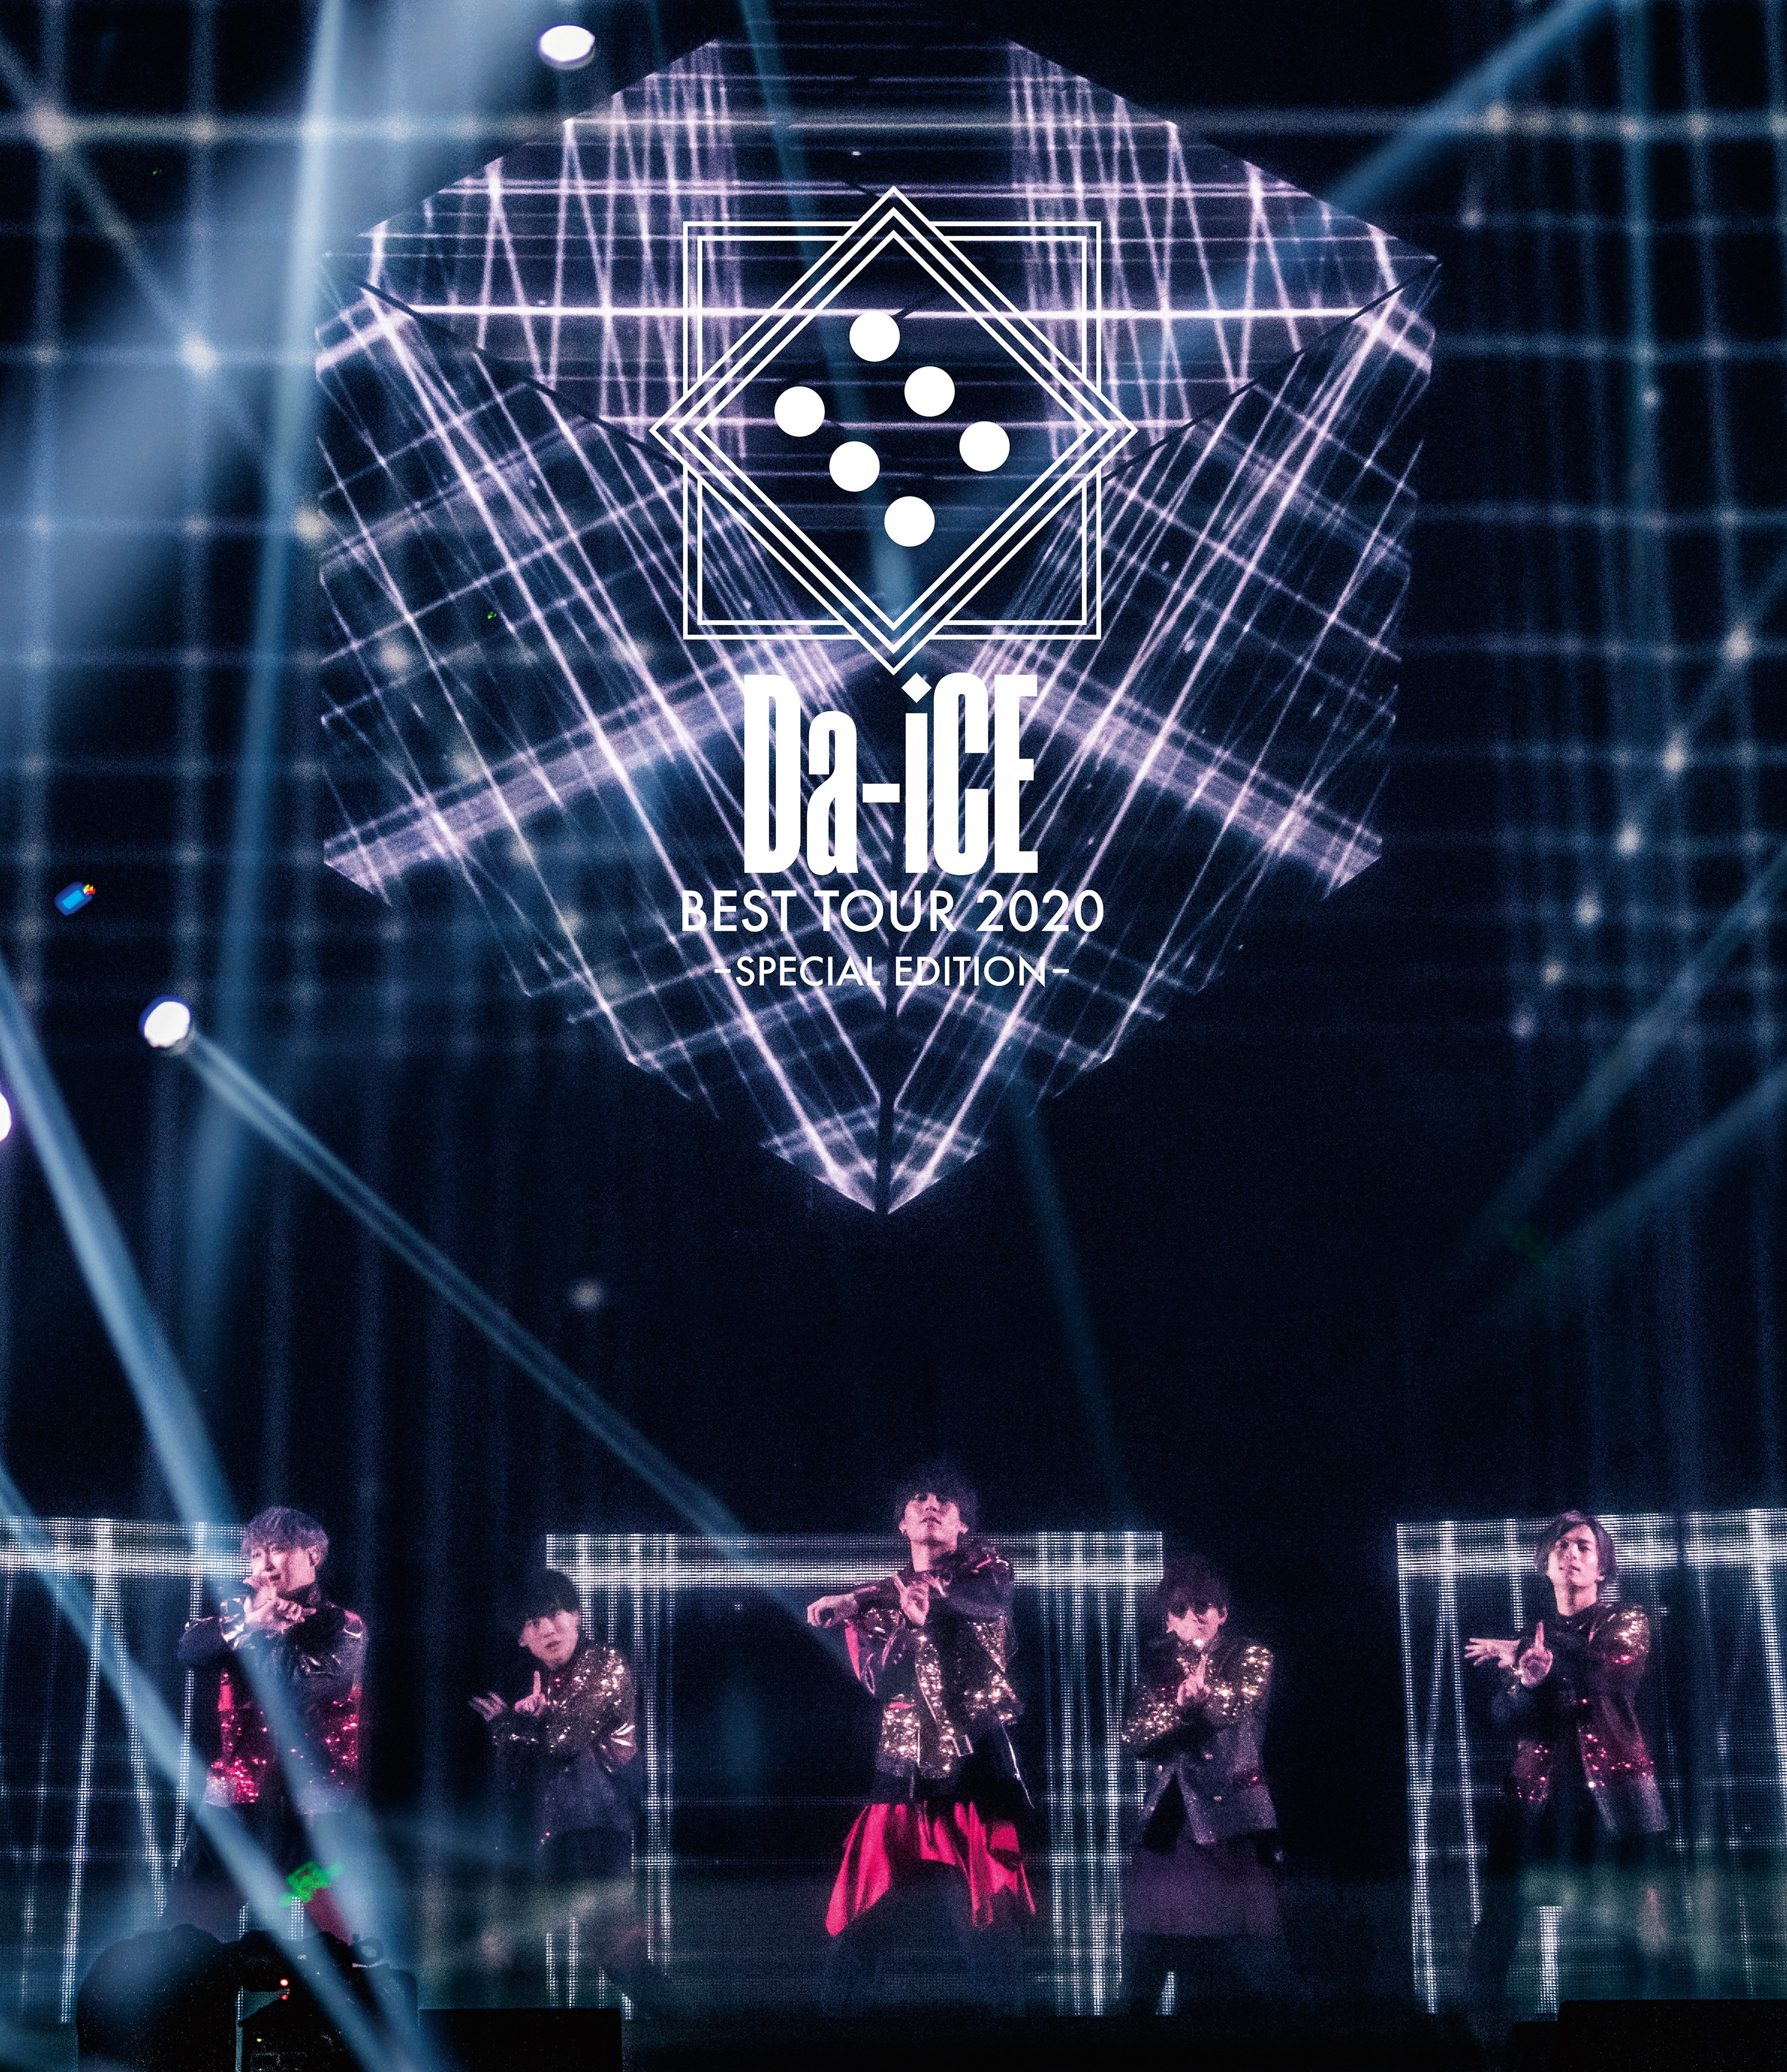 DVD※確定※Da-iCE LIVE TOUR DVD&Blu-ray(セット価格) - ミュージック